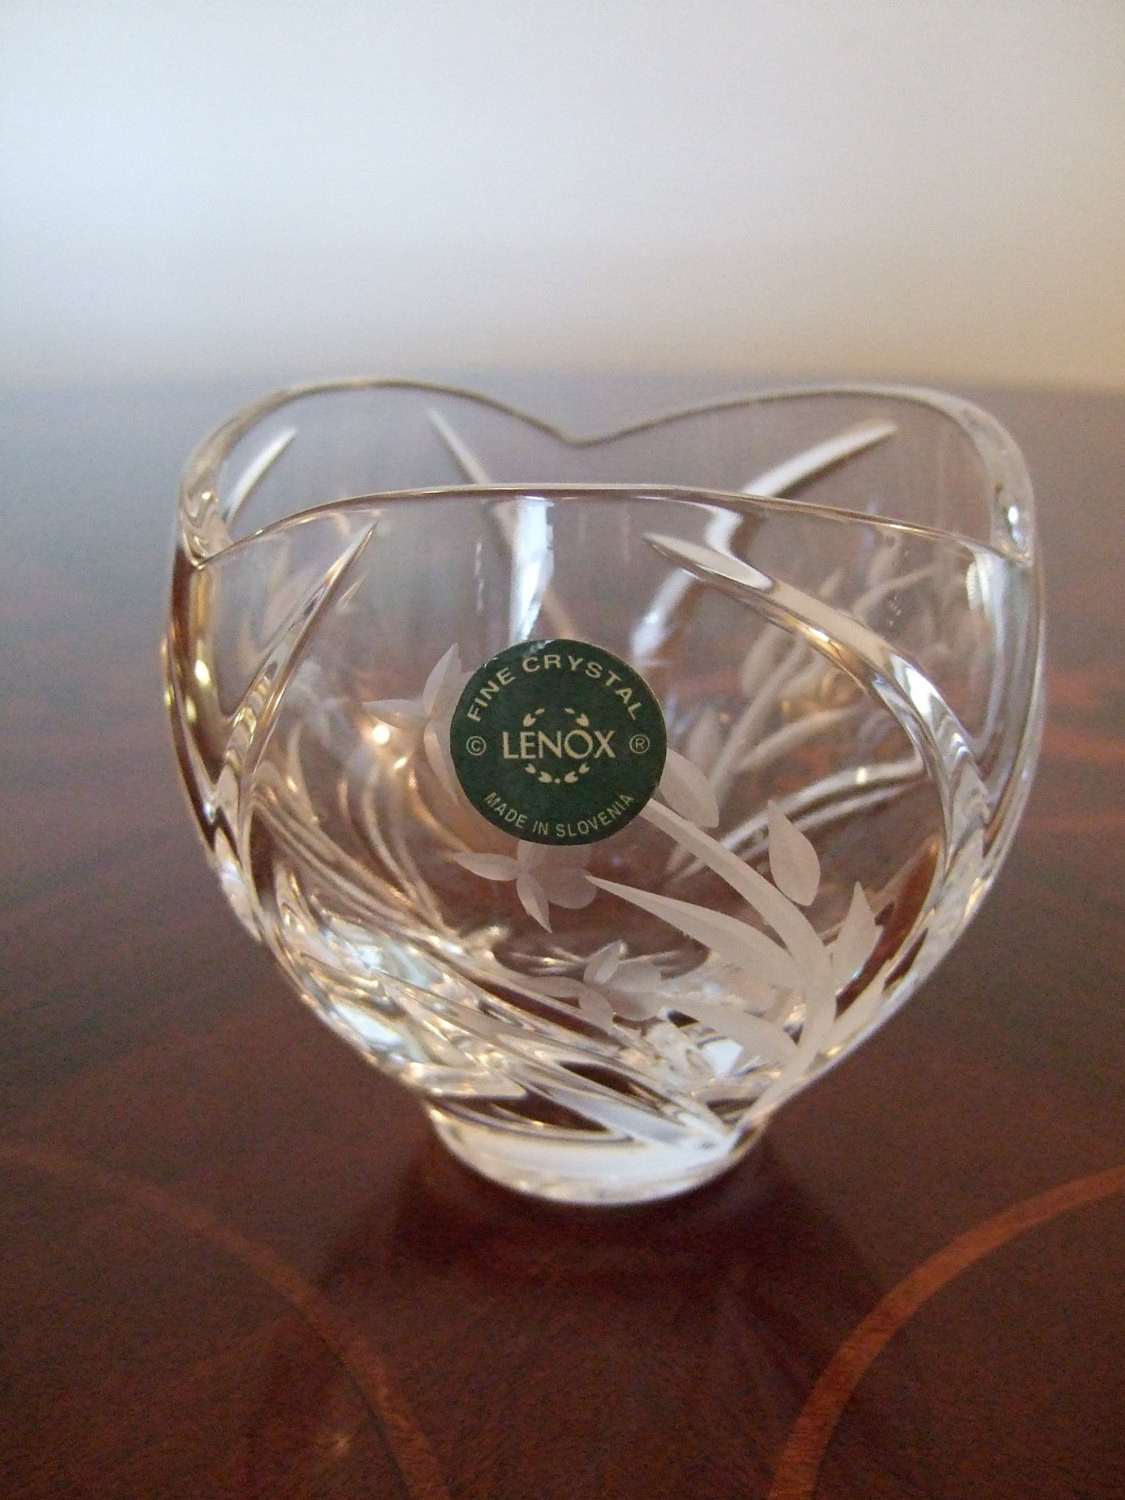 lenox vases ebay of 19 best of lenox crystal vase macys bogekompresorturkiye com with regard to fine lenox crystal etched vase made in